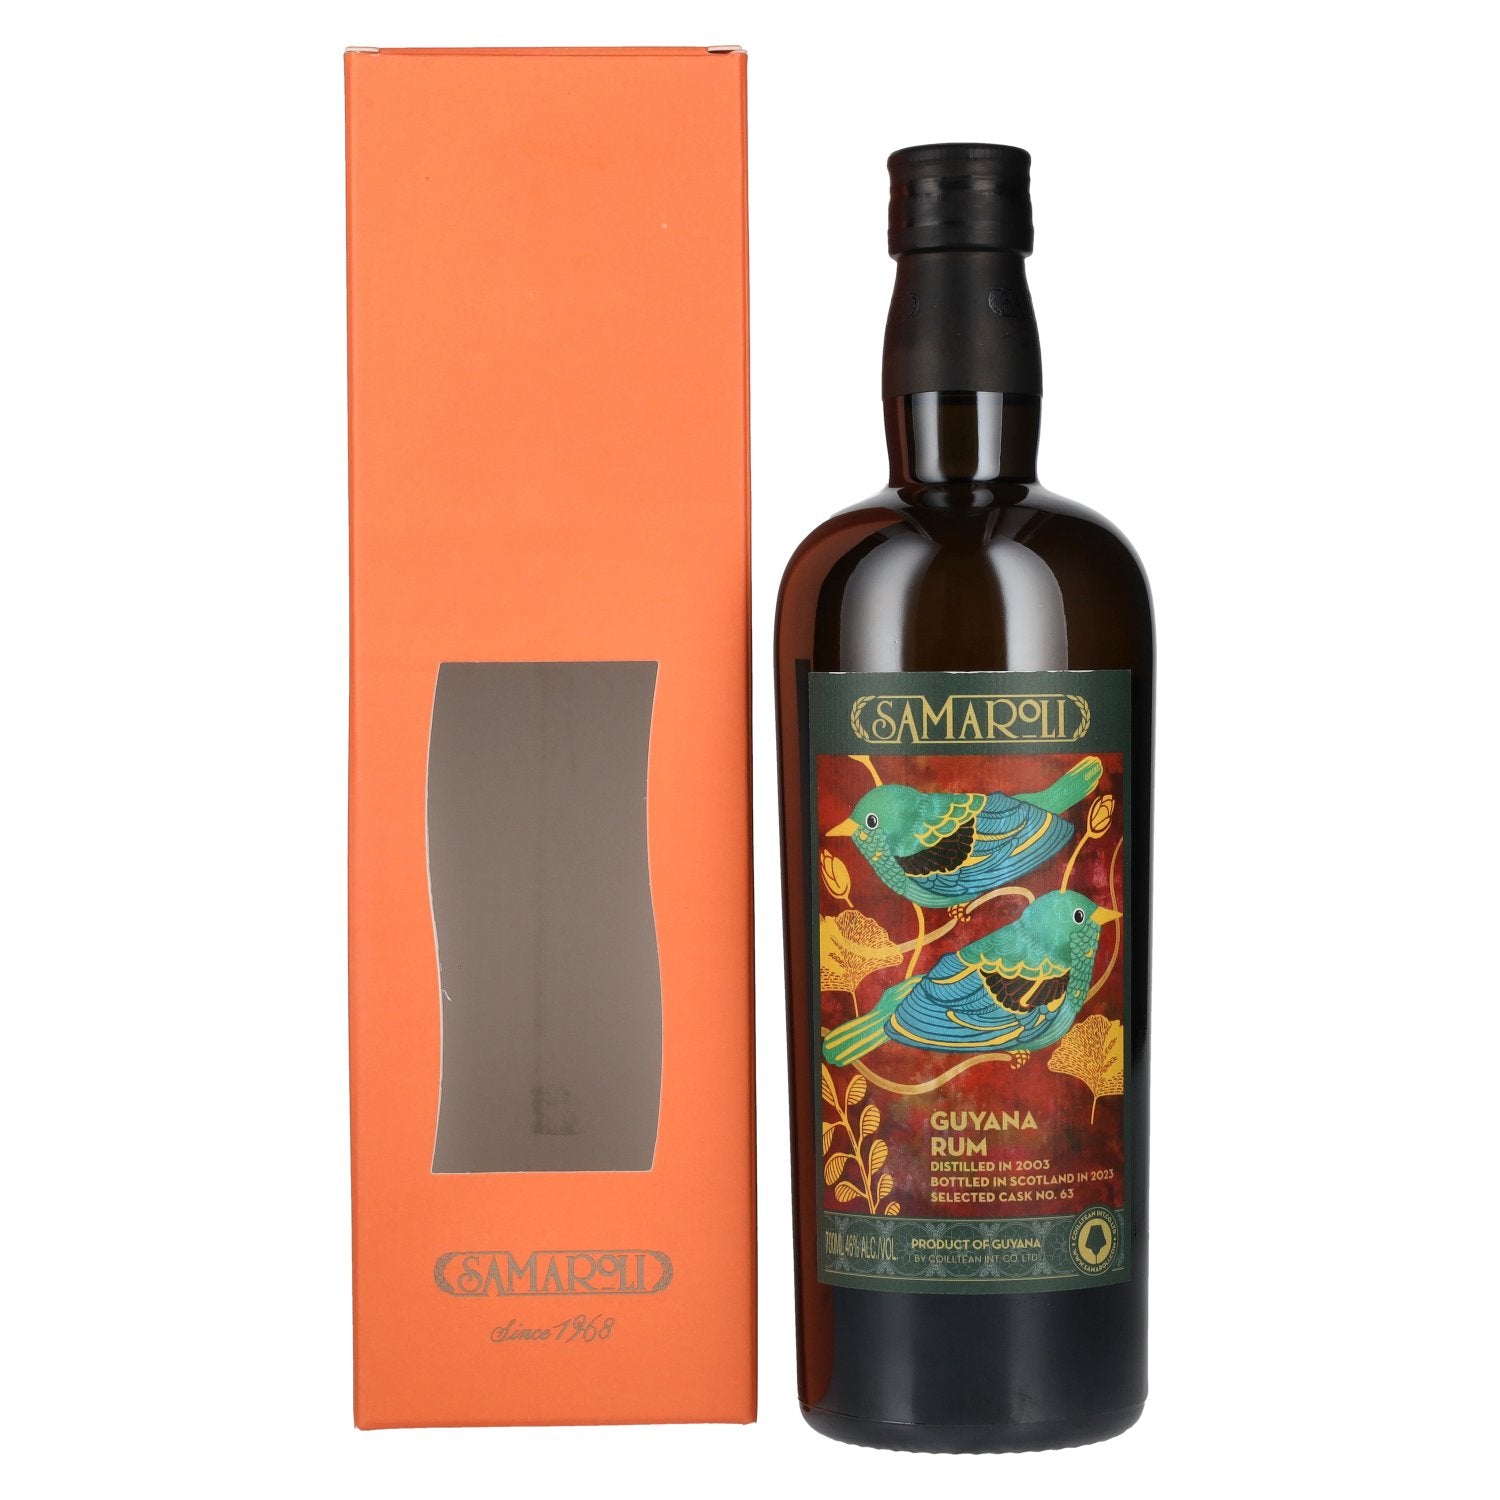 Samaroli Guyana Rum 2003 46% Vol. 0,7l in Giftbox